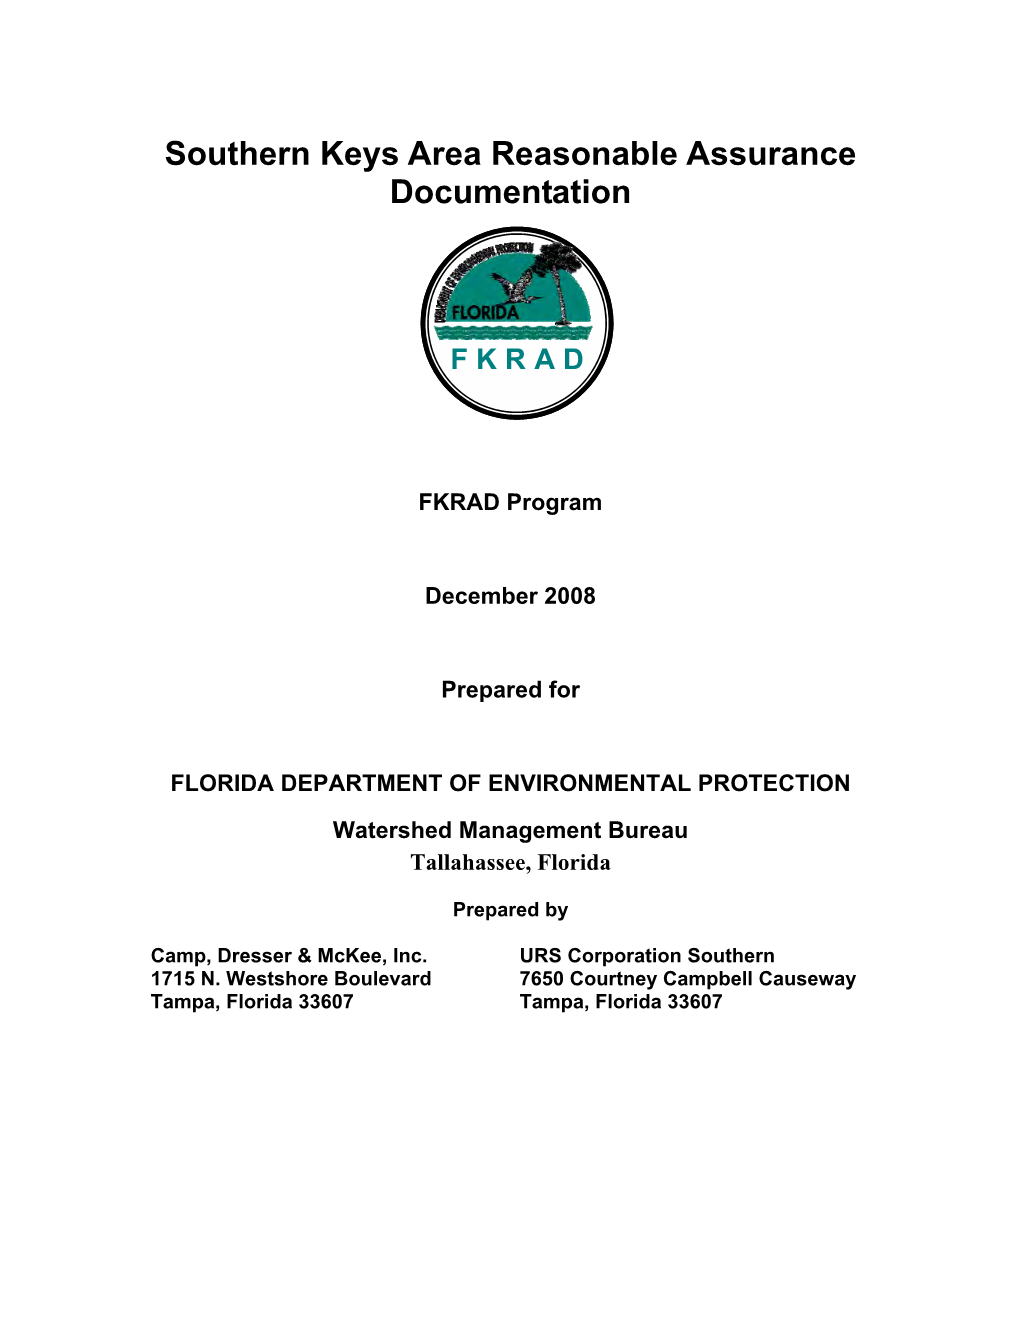 Southern Keys Area Reasonable Assurance Documentation